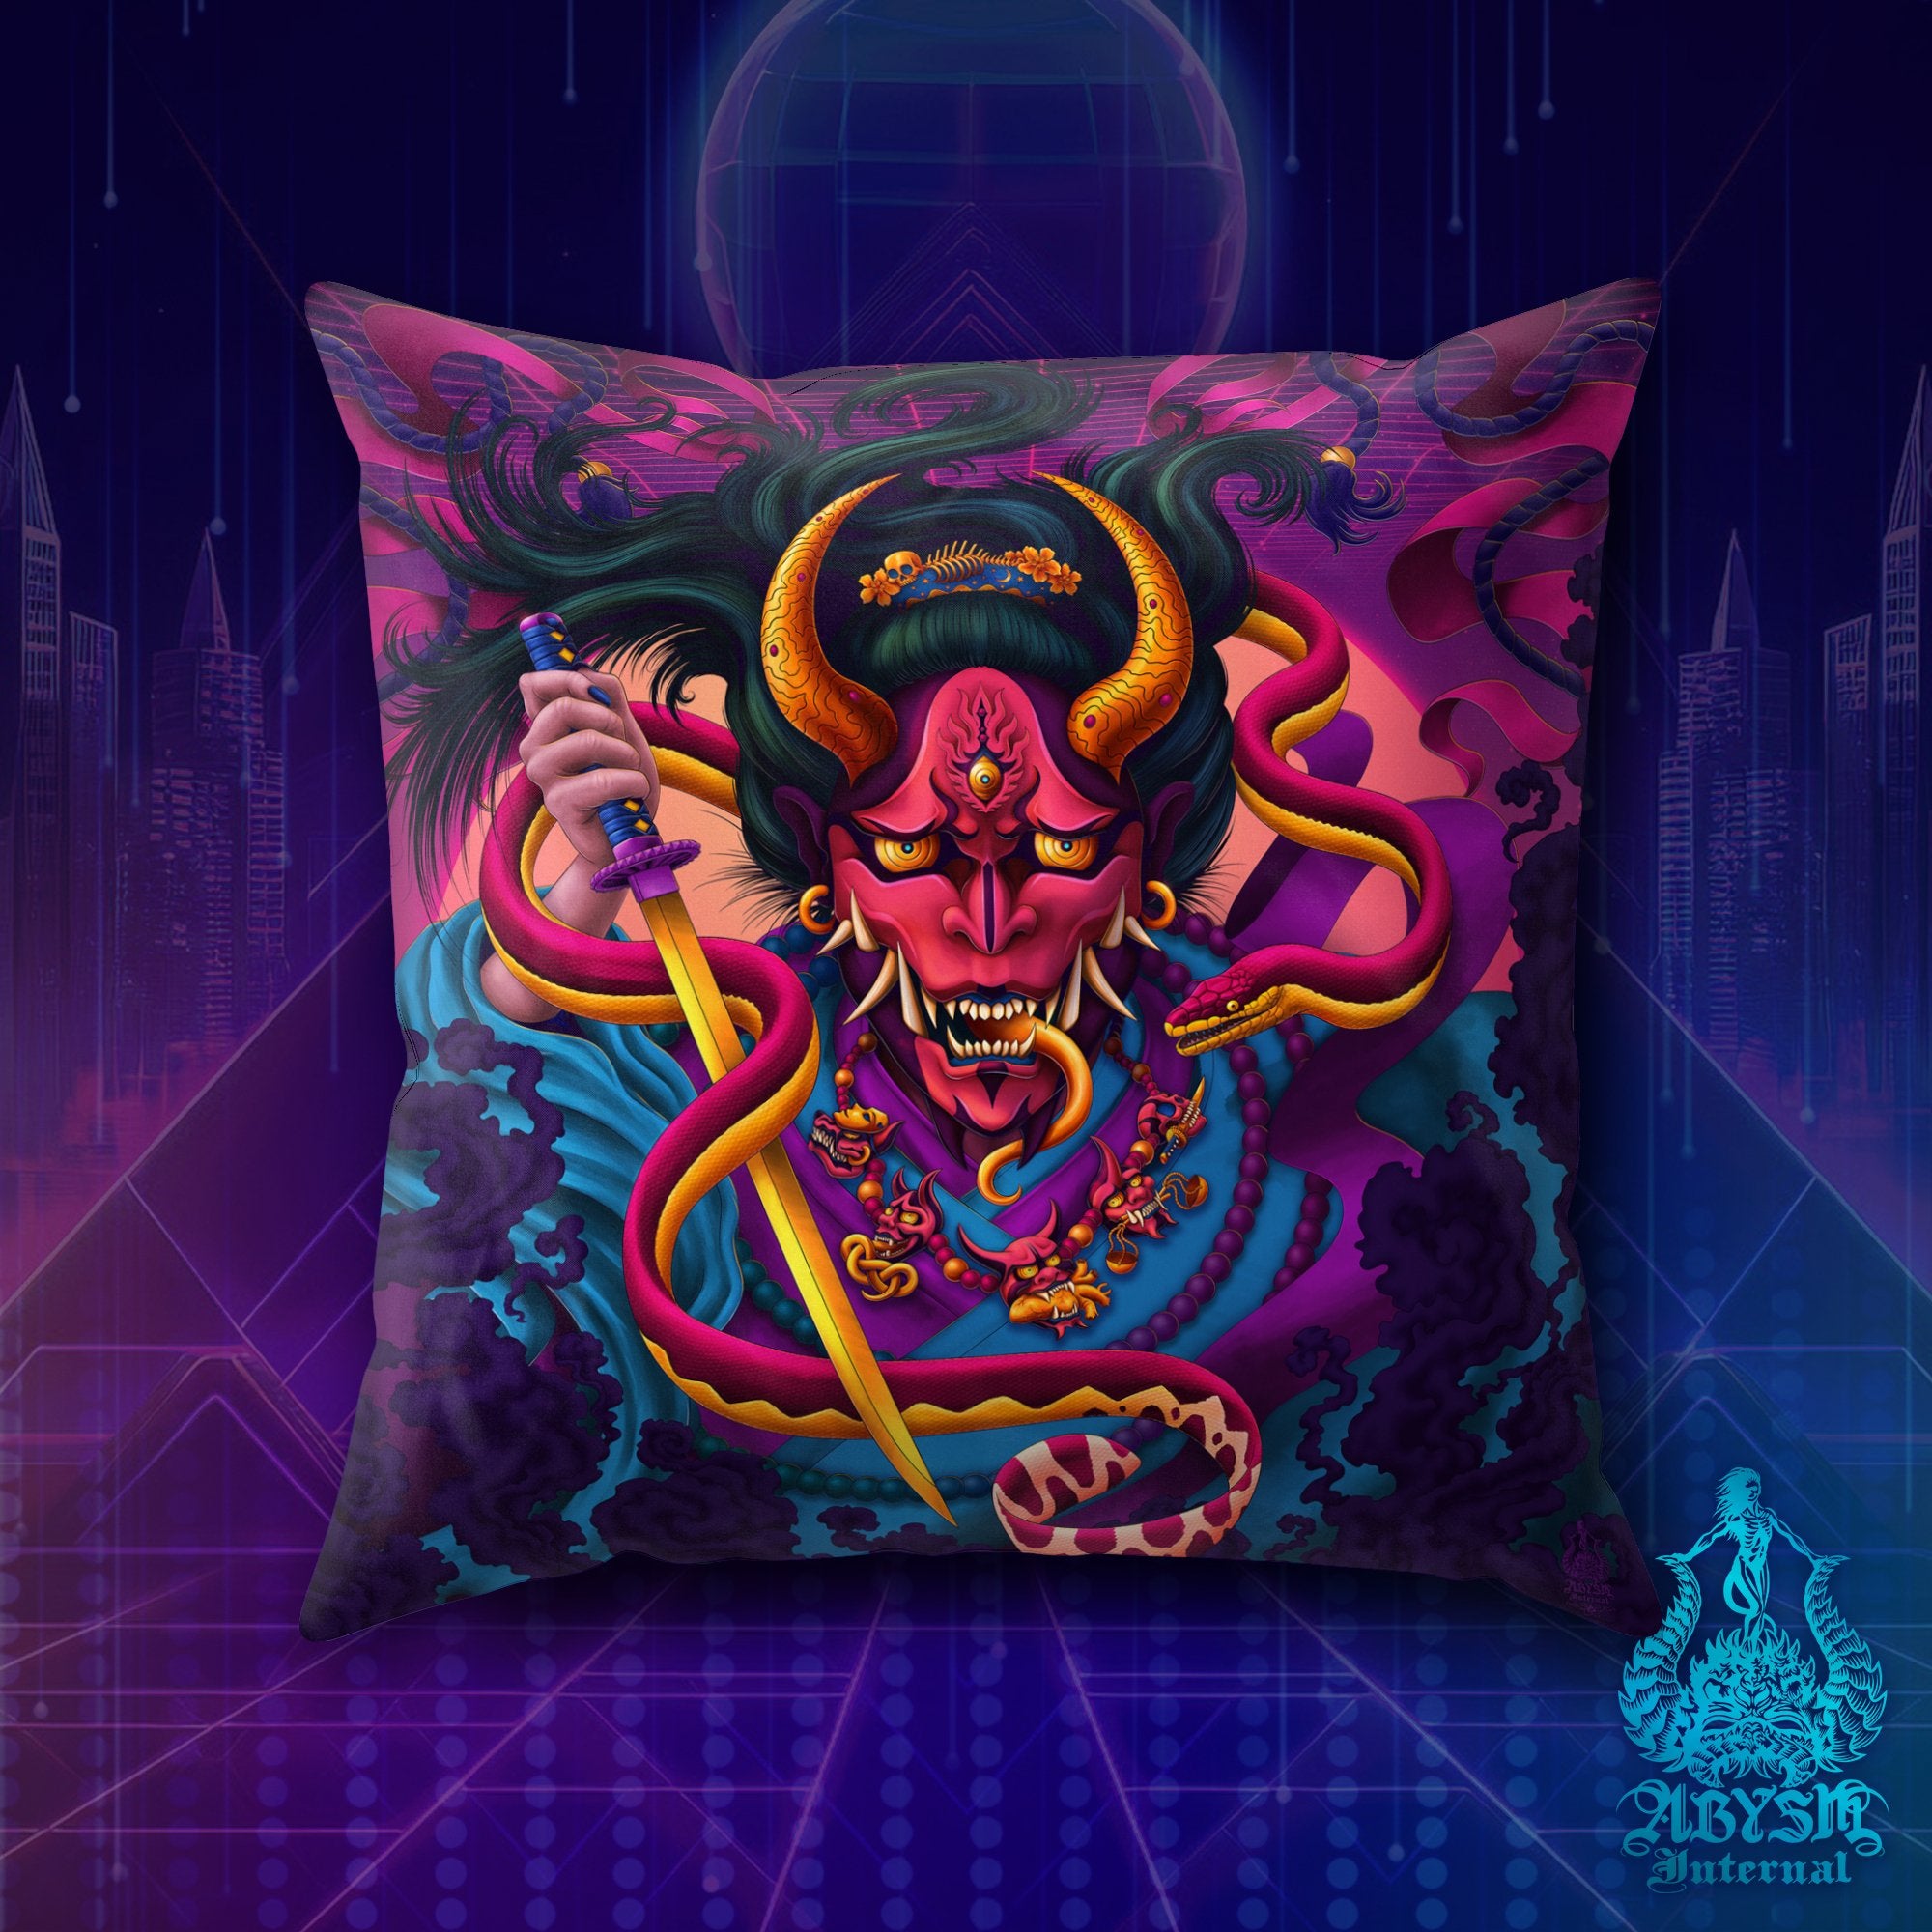 Hannya Throw Pillow, Decorative Accent Pillow, Square Cushion Cover, Japanese Demon & Snake, Gamer Room Decor - Vaporwave - Abysm Internal